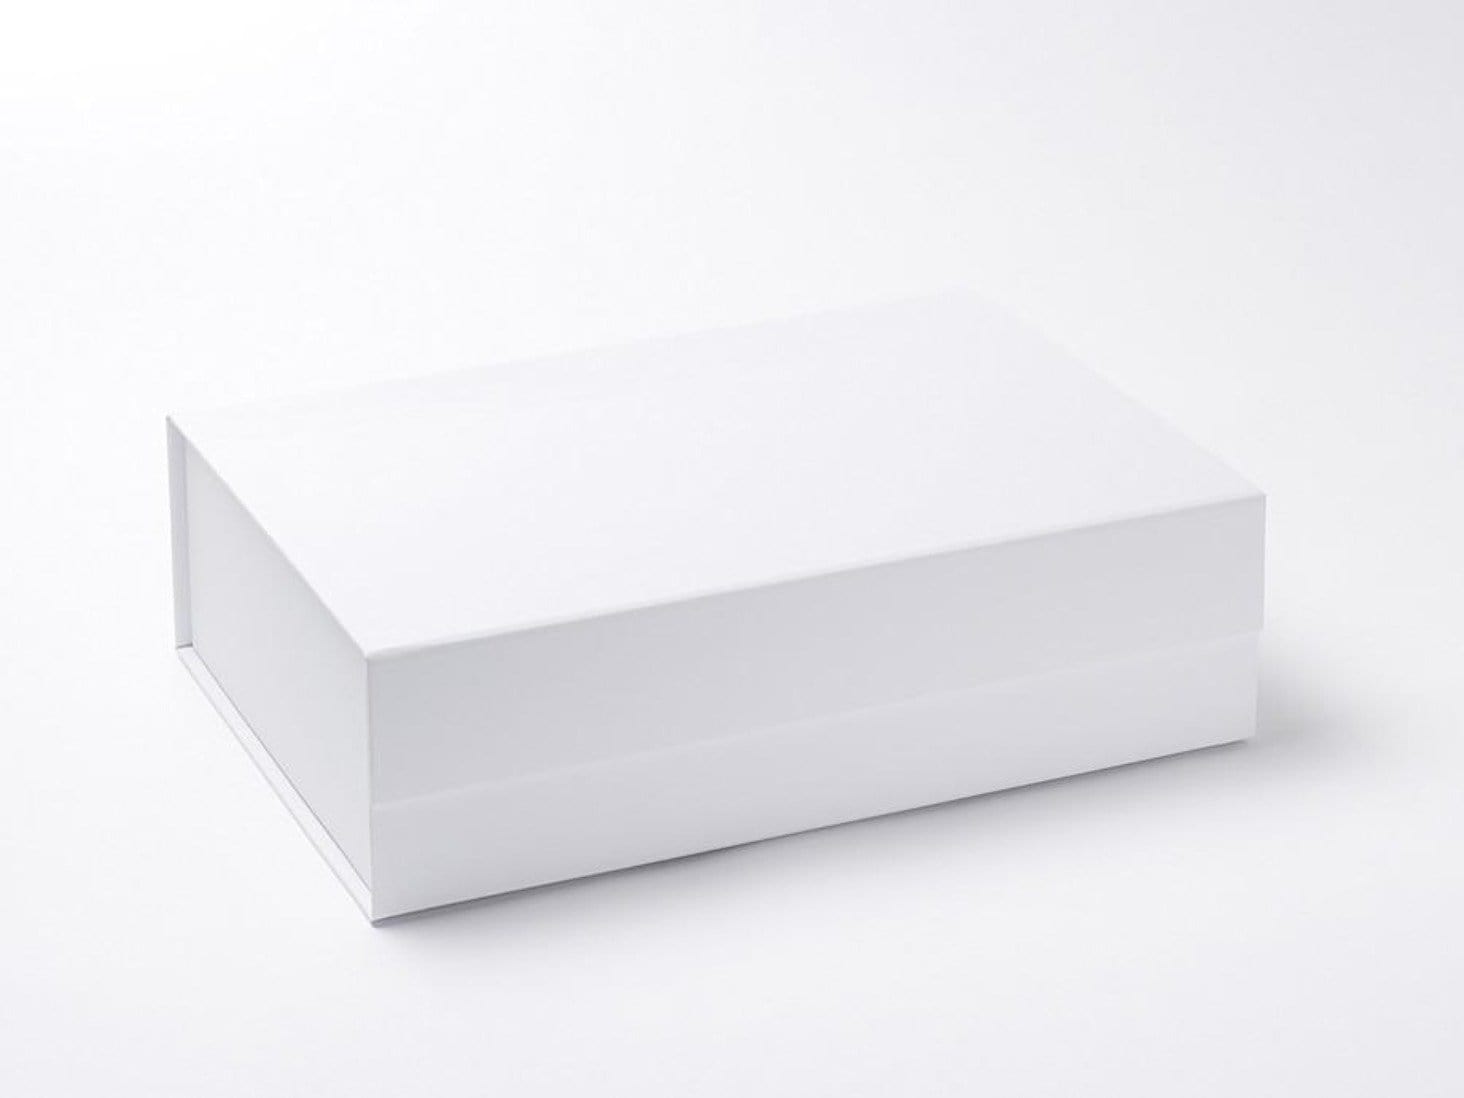 Sample White A4 Deep Luxury Gift Box no ribbon from UK stock | Foldabox ...